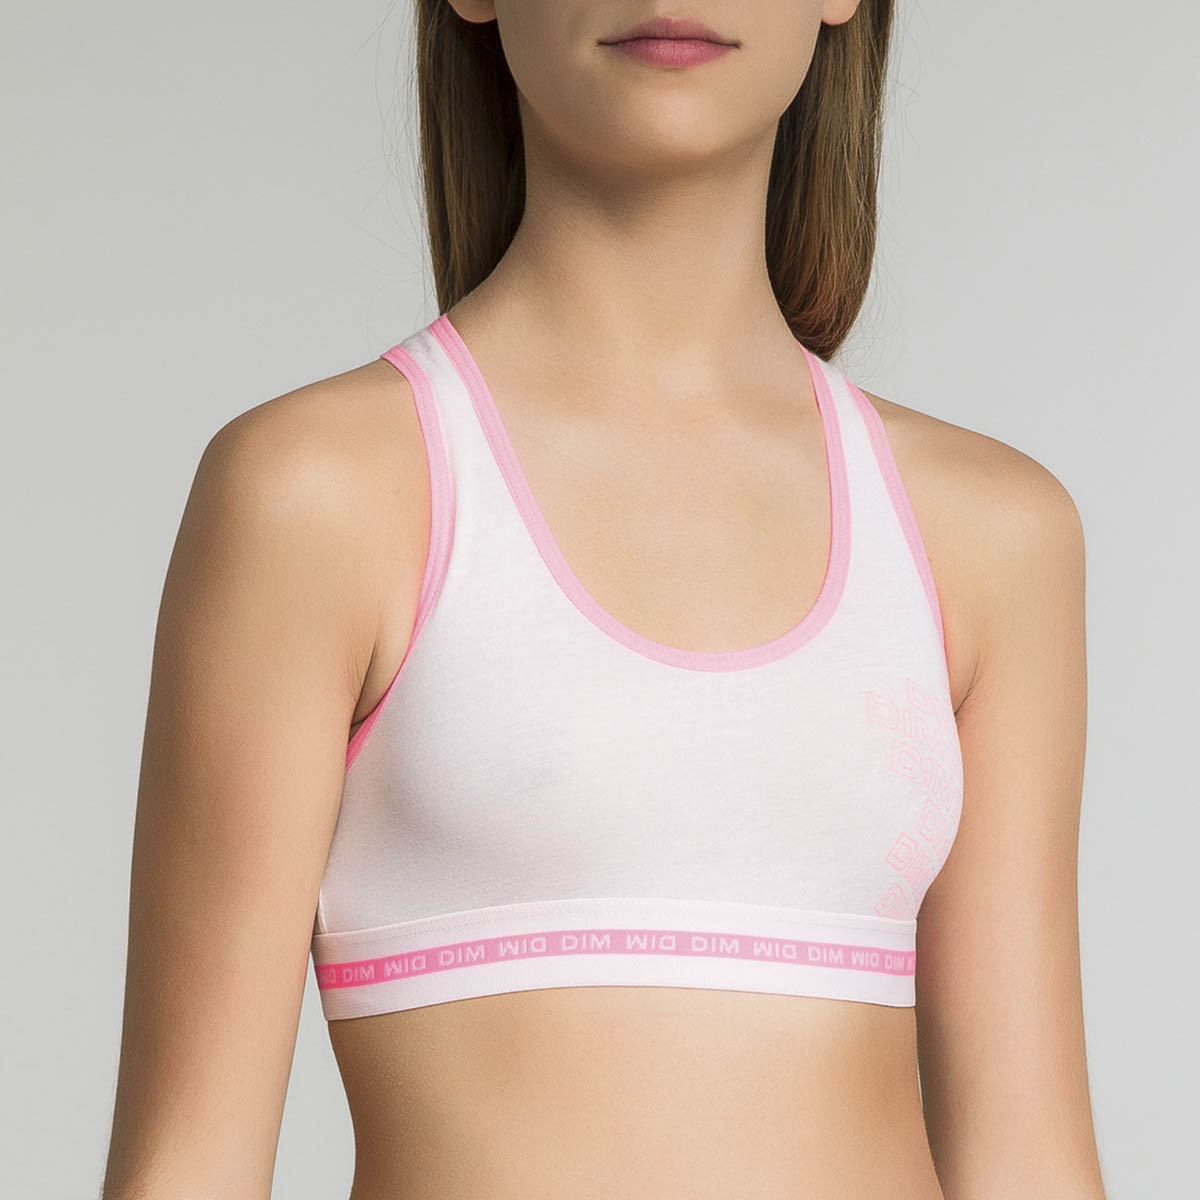 Metallic Sports Bra Garment size S Color Pink